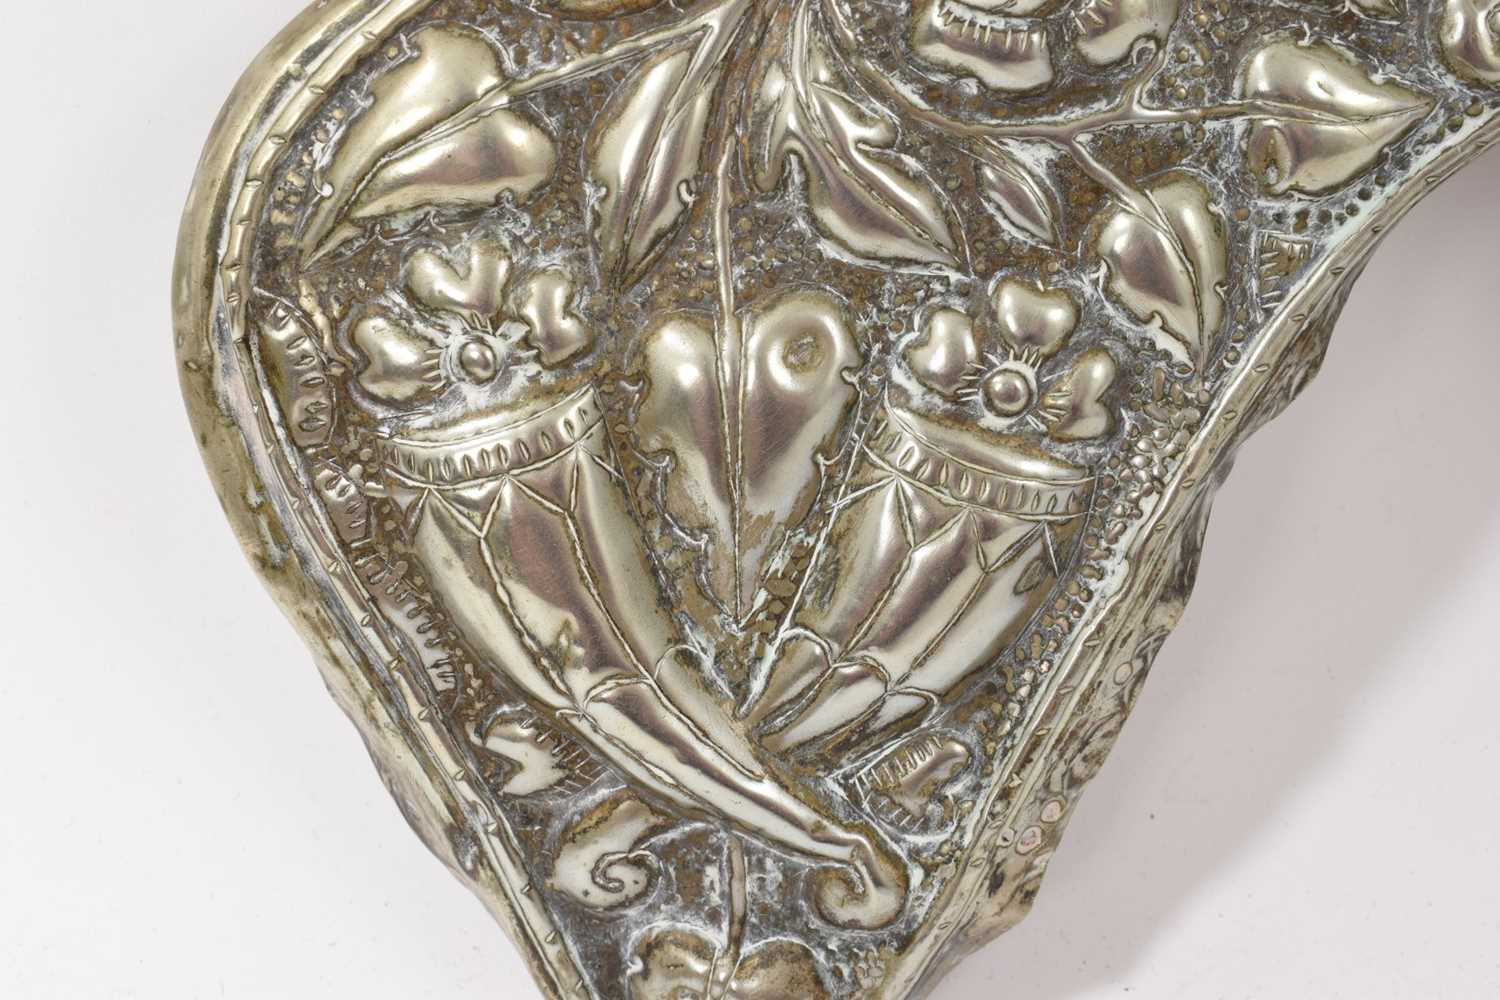 19th century South American white metal saddle mount - Image 2 of 5